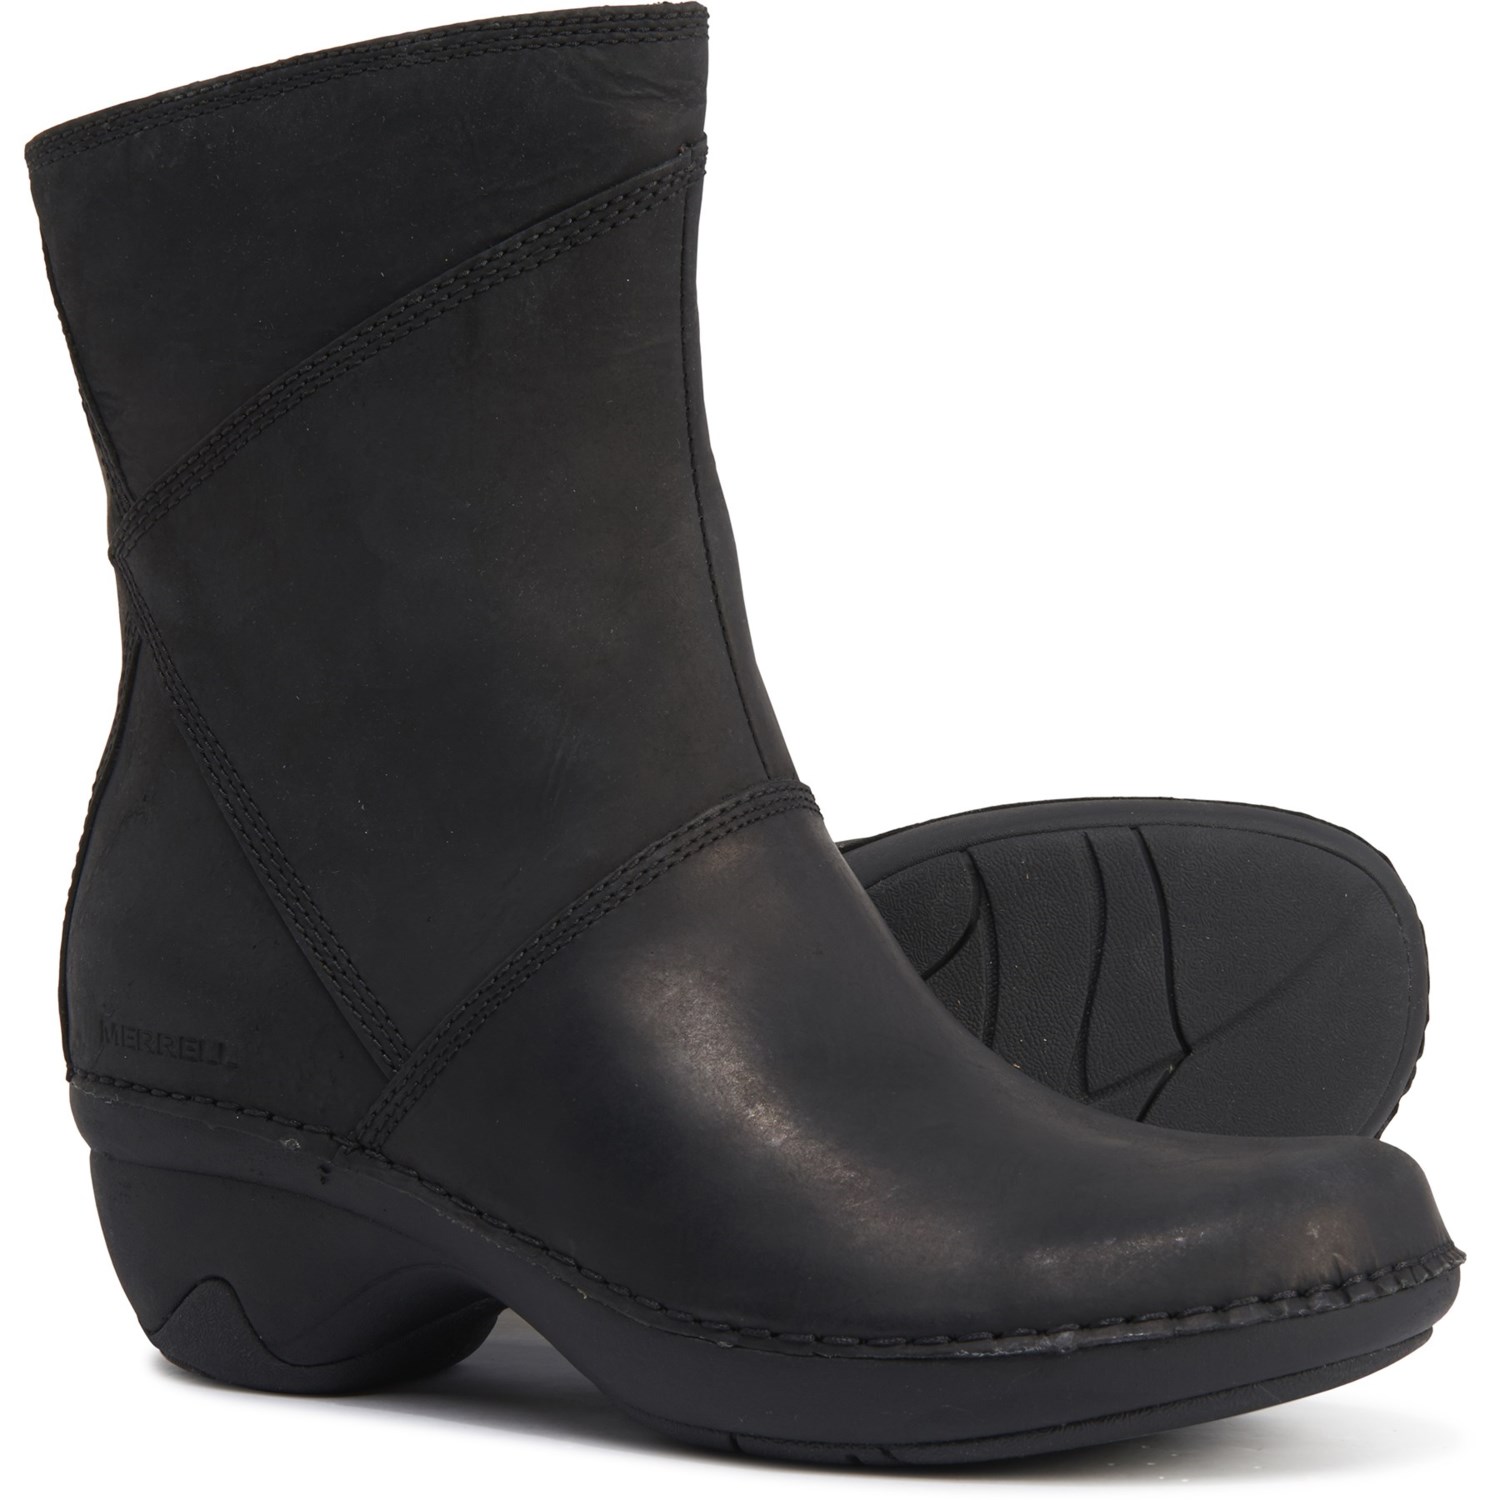 Merrell Black Emma Mid Boots (For Women 